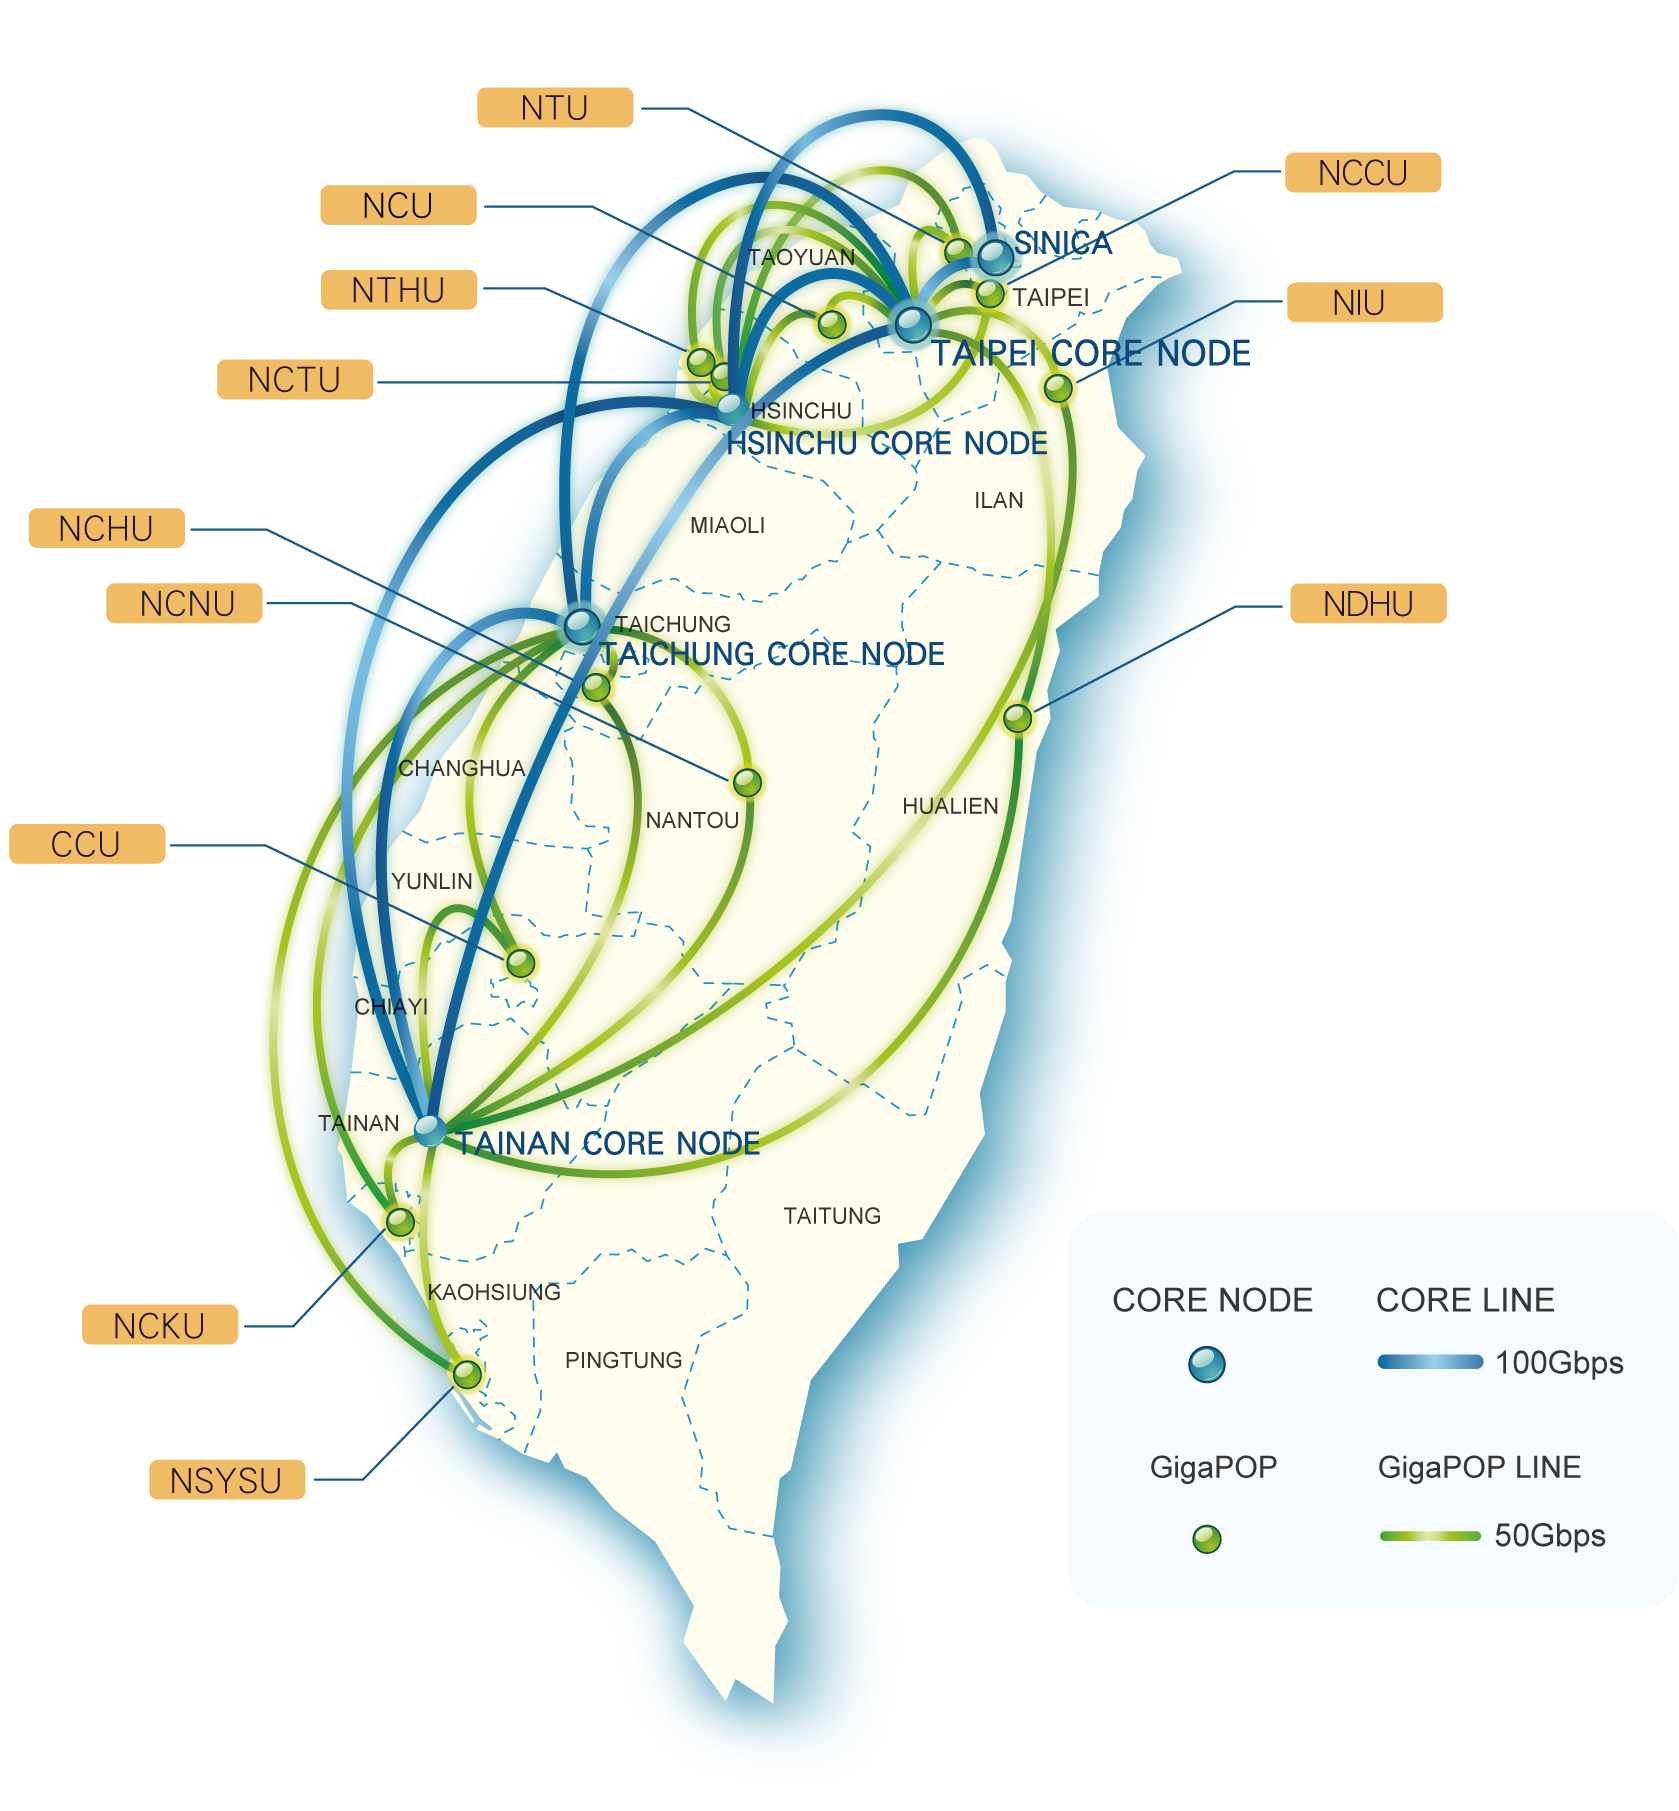 TWAREN has five core nodes and 12 regional network centres.